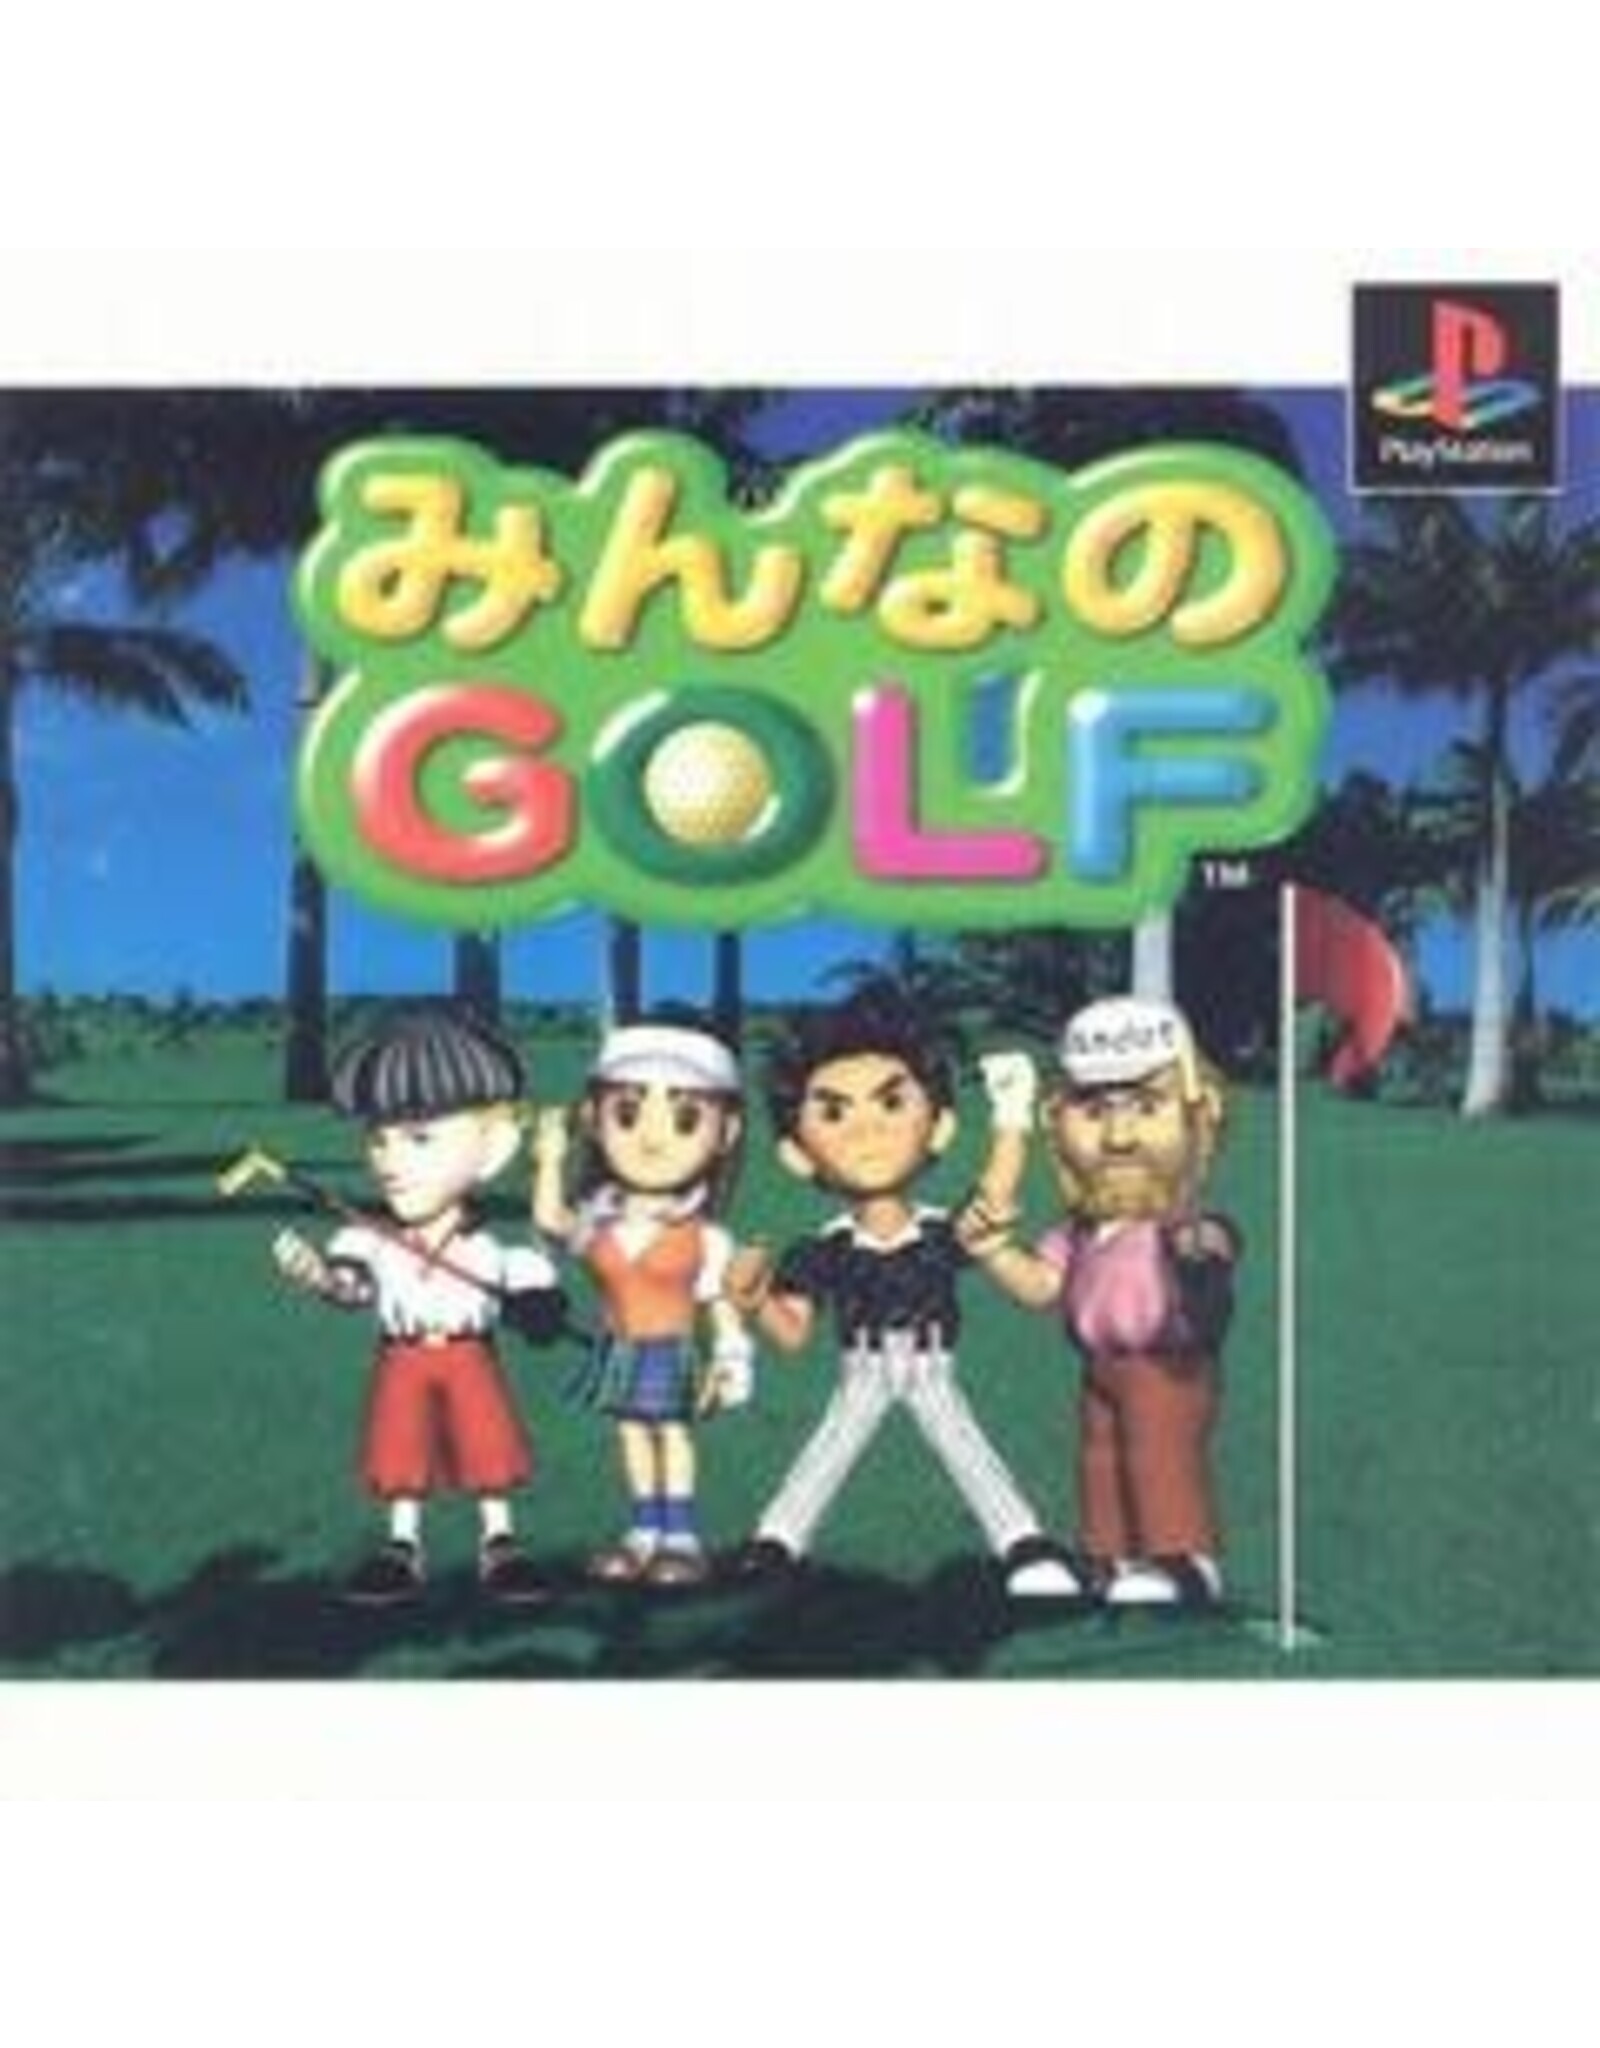 Playstation Minna No Golf - JP Import (Used)